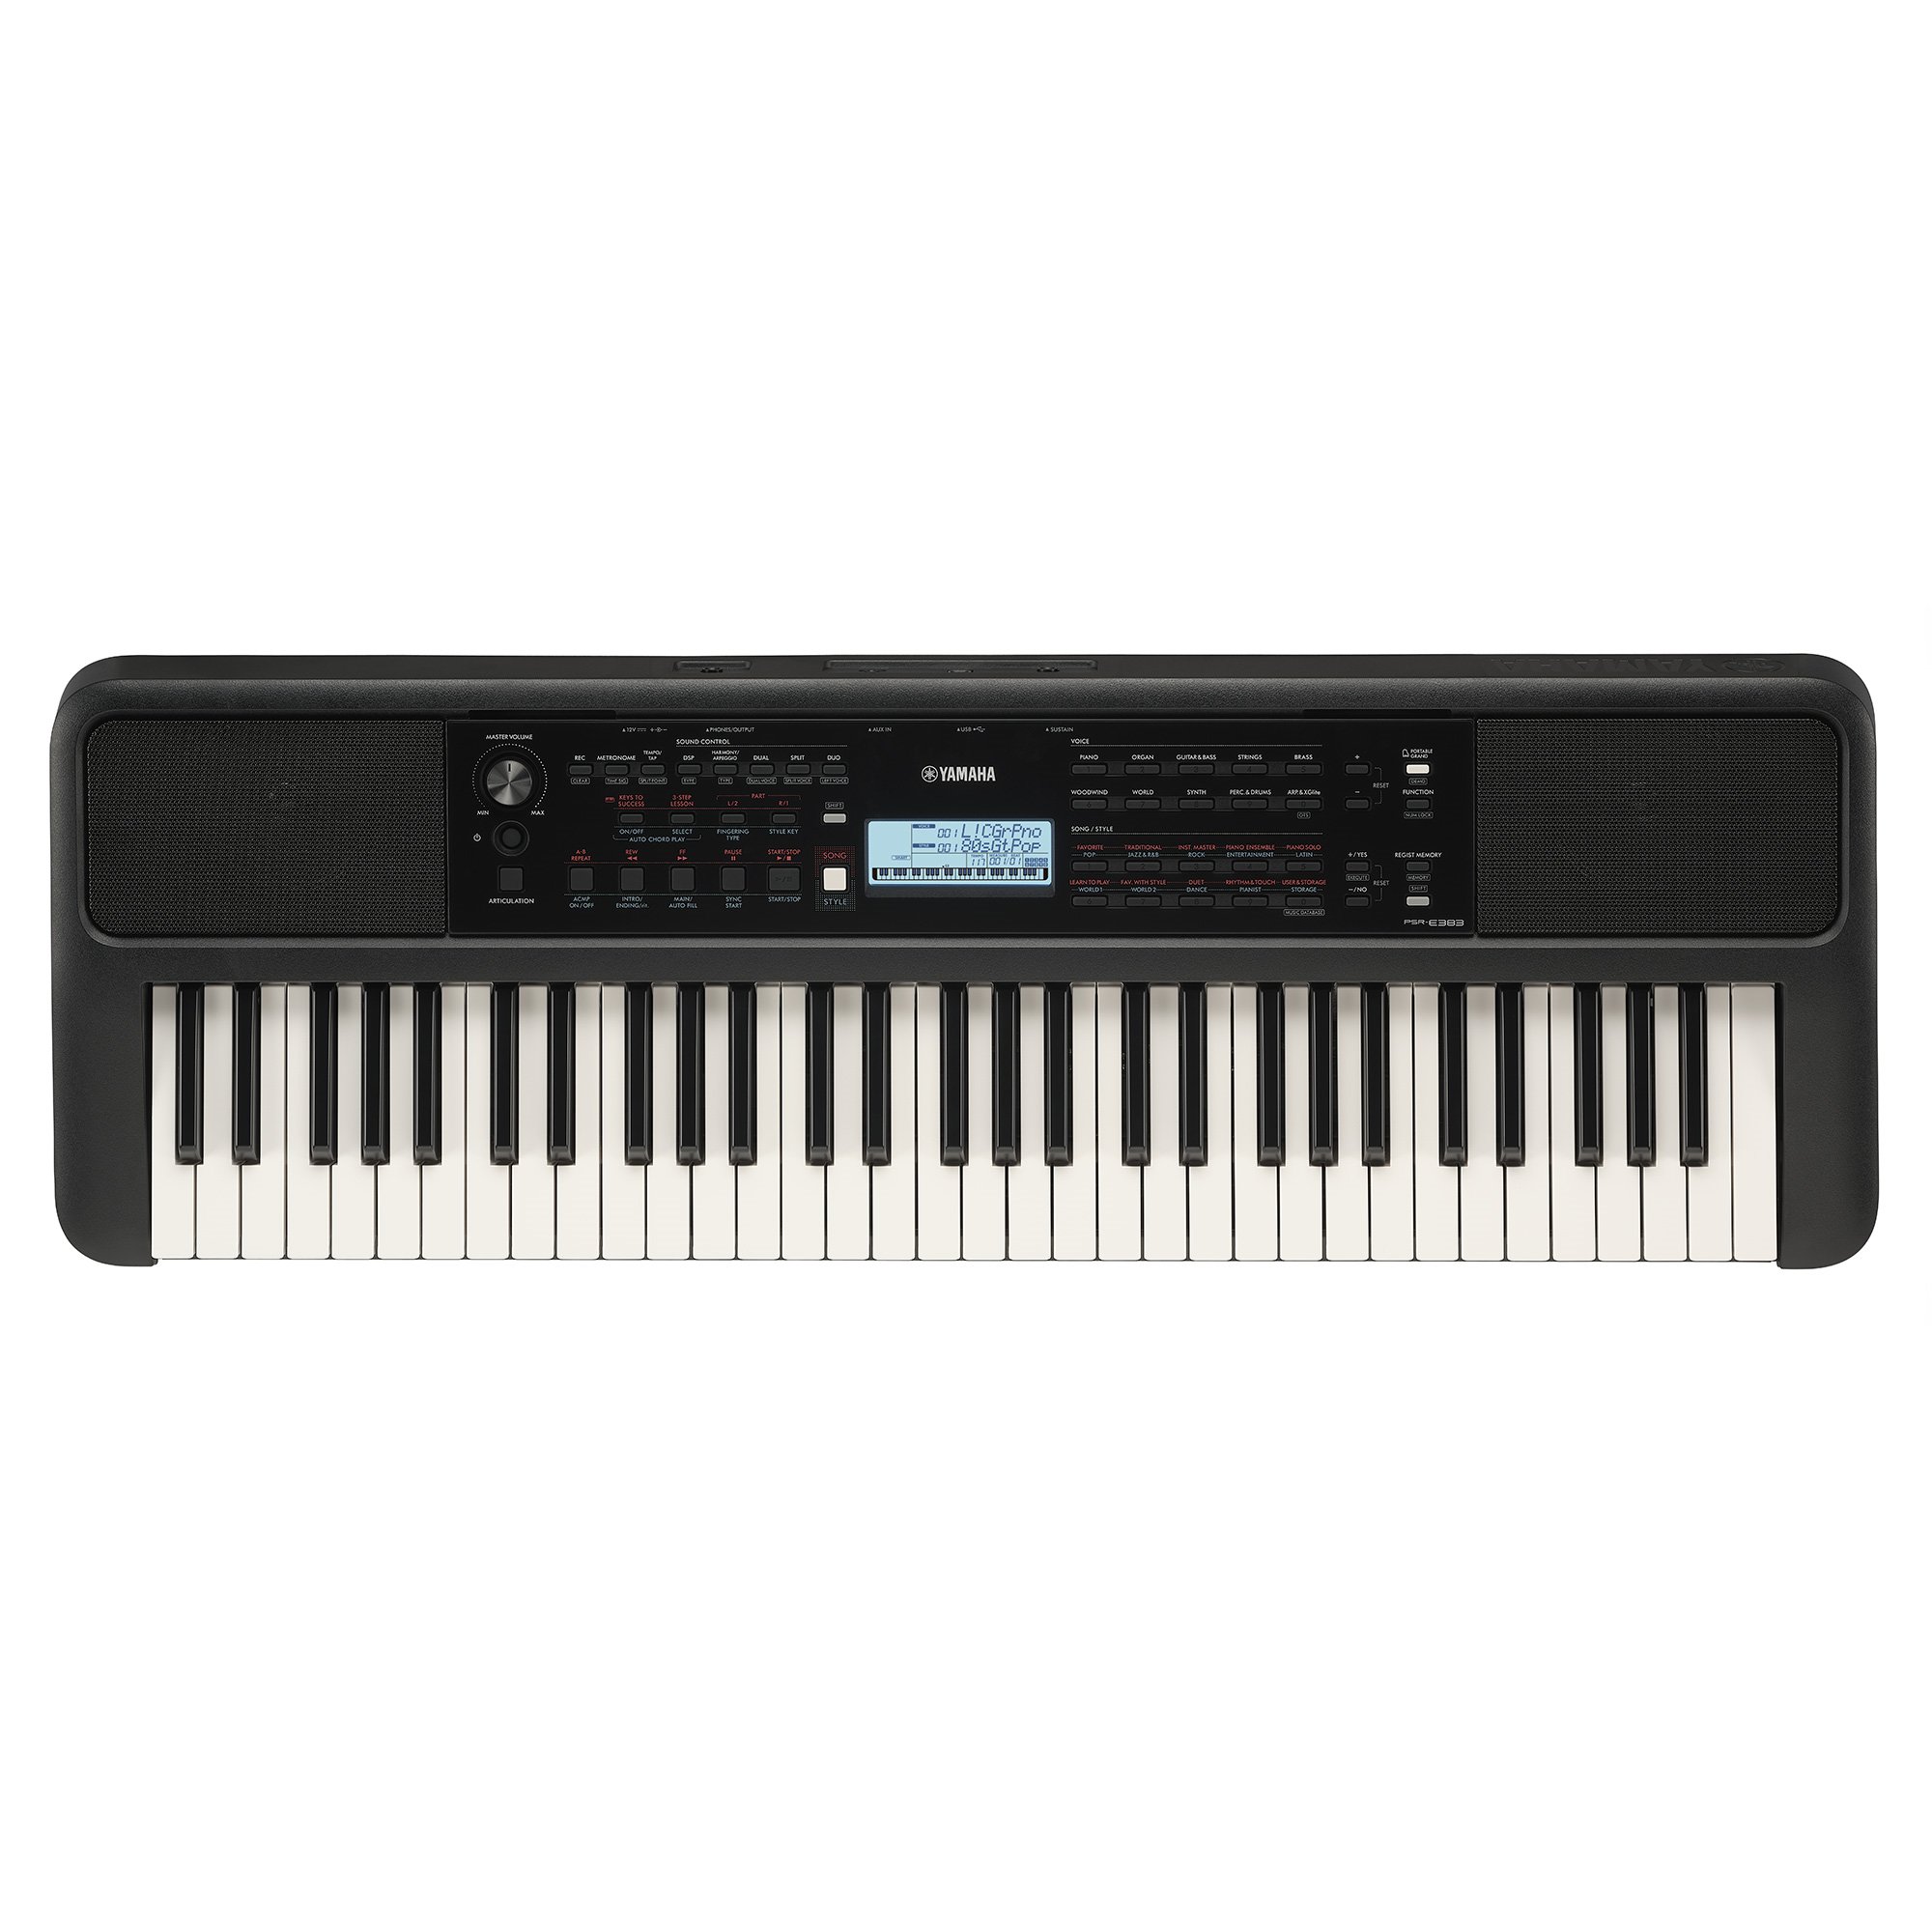 Portable Keyboards - Keyboard Instruments - Musical ...